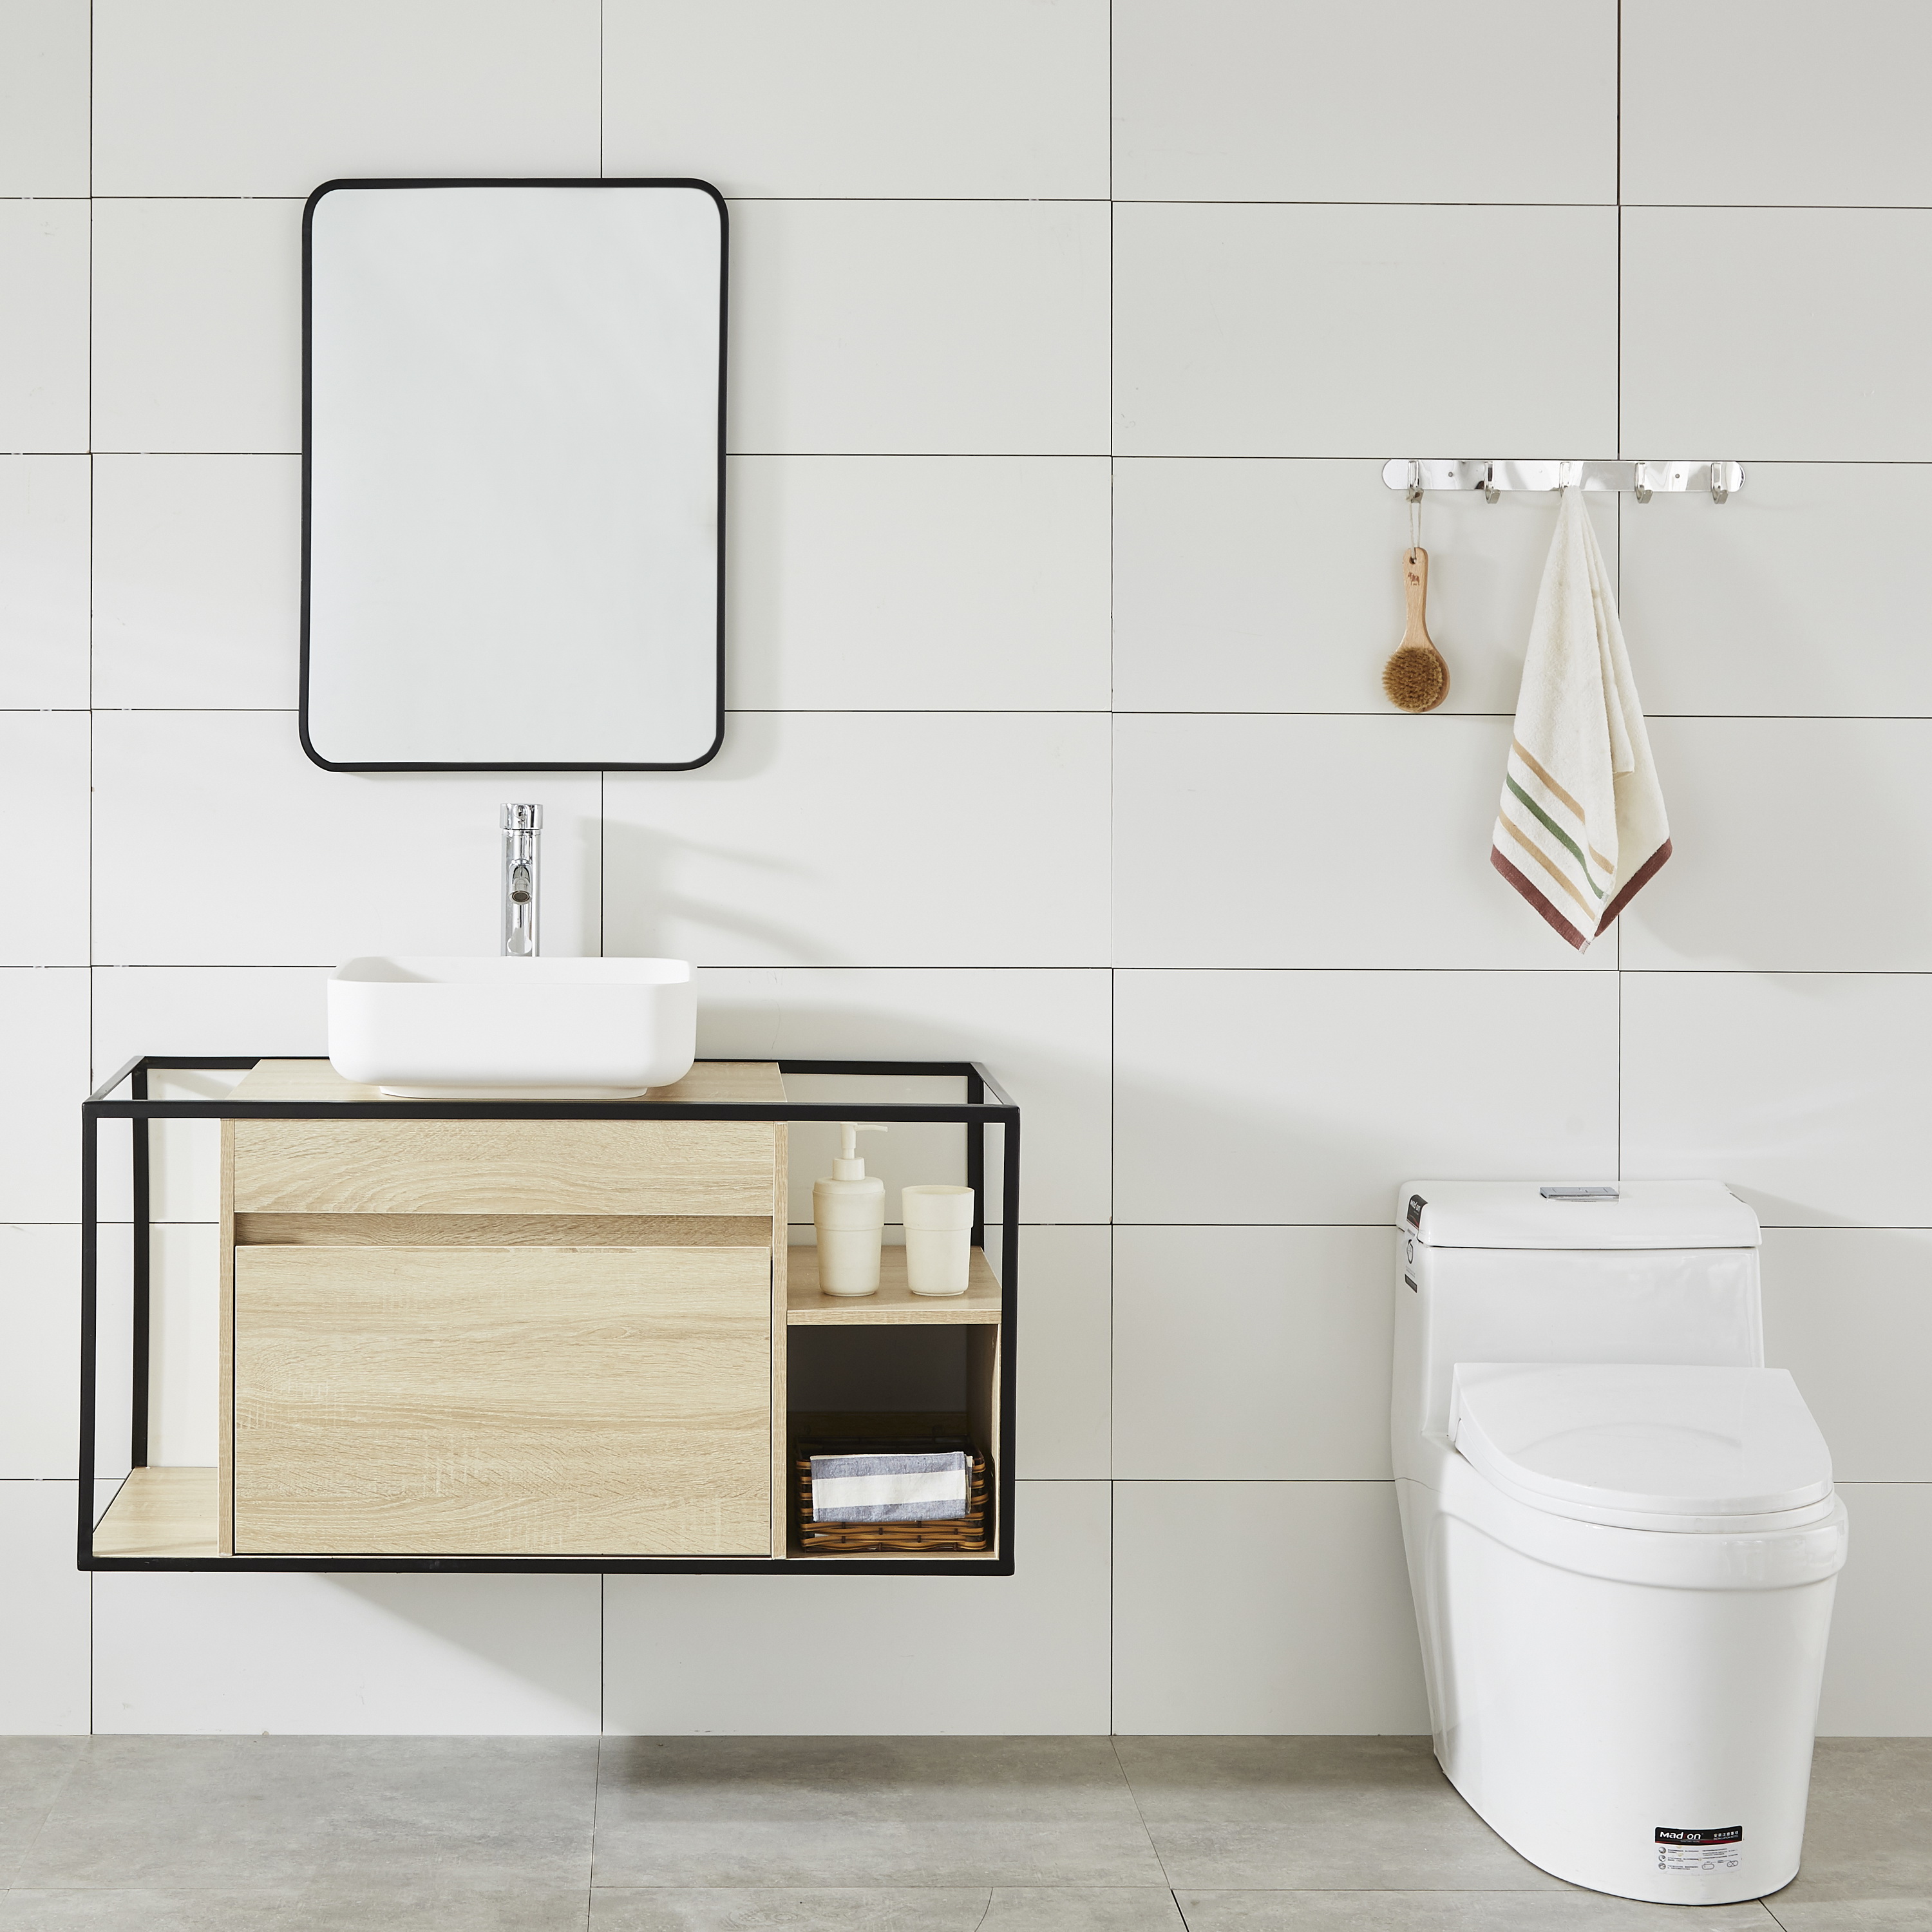 New Design Matt Black Metal Frame Industry Style Modern Bathroom Cabinet with Basin Vanity Set